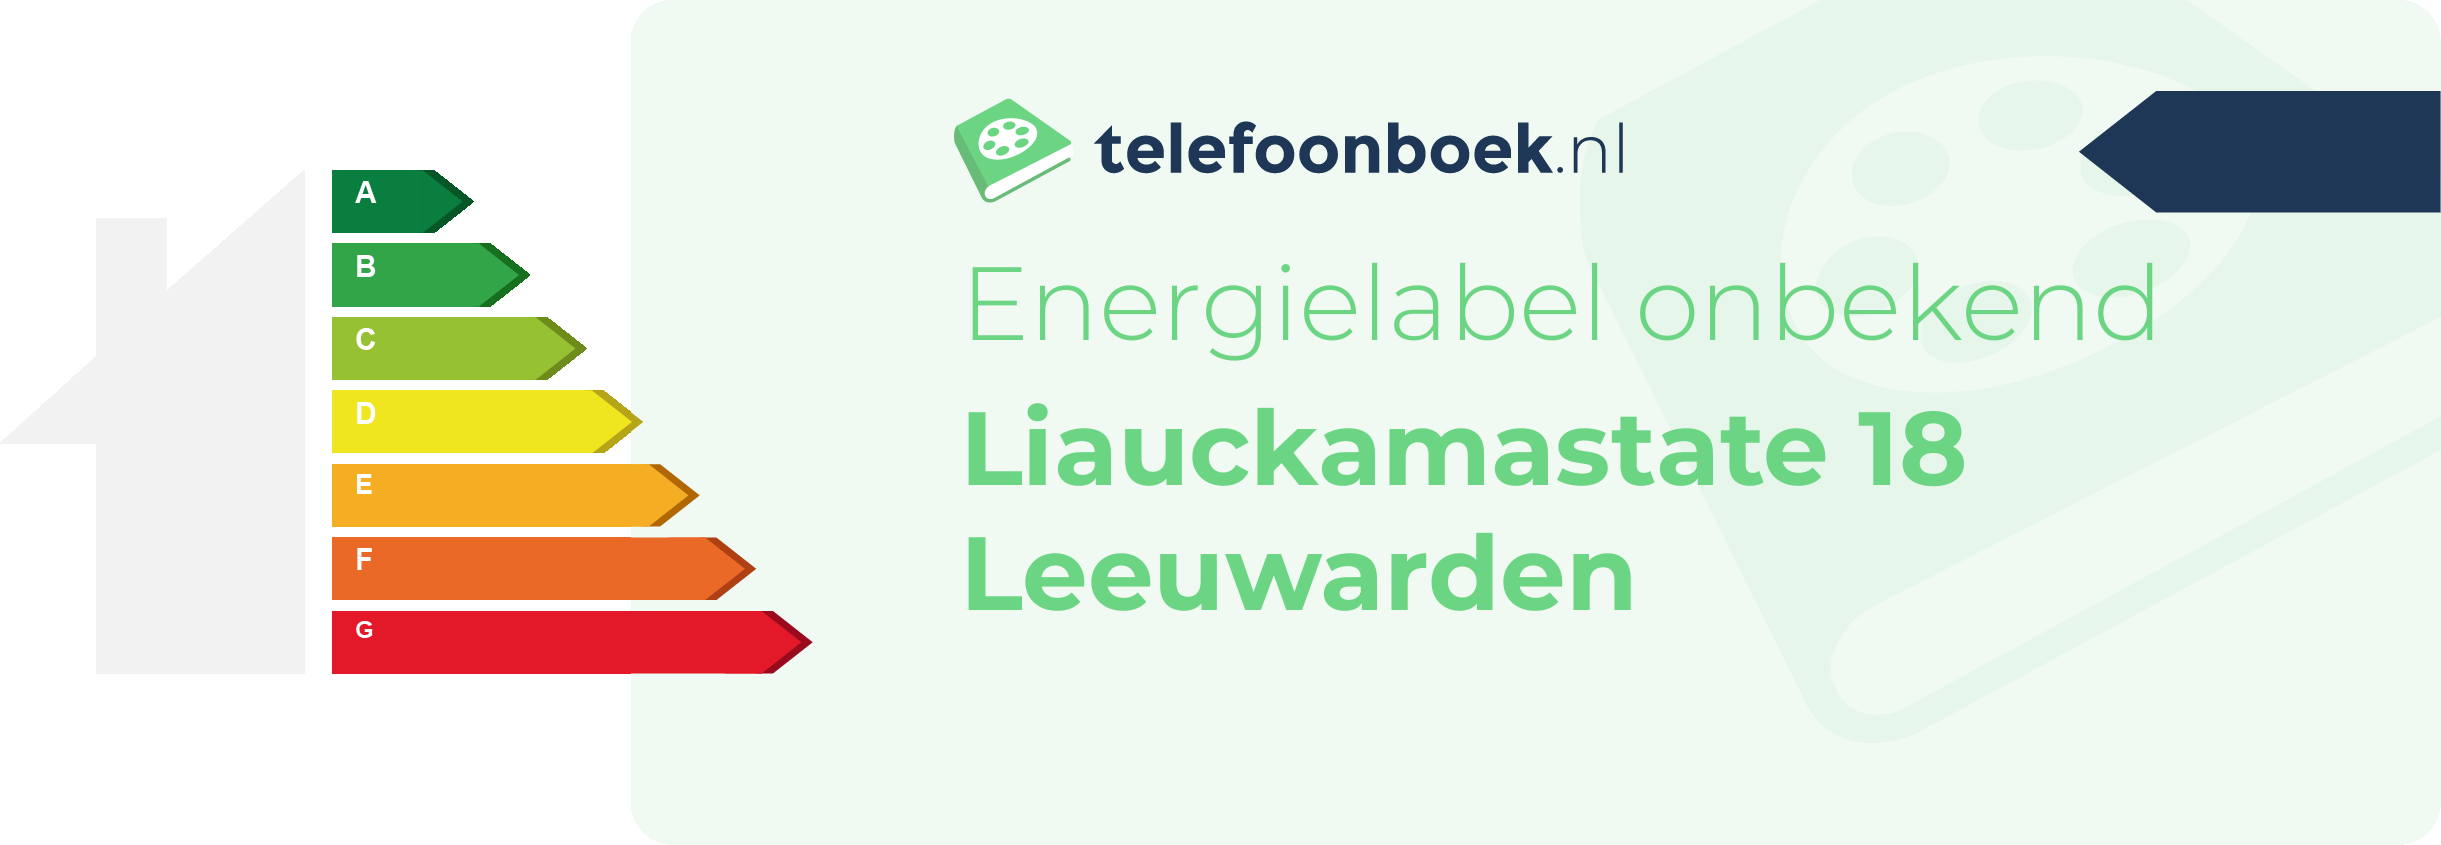 Energielabel Liauckamastate 18 Leeuwarden